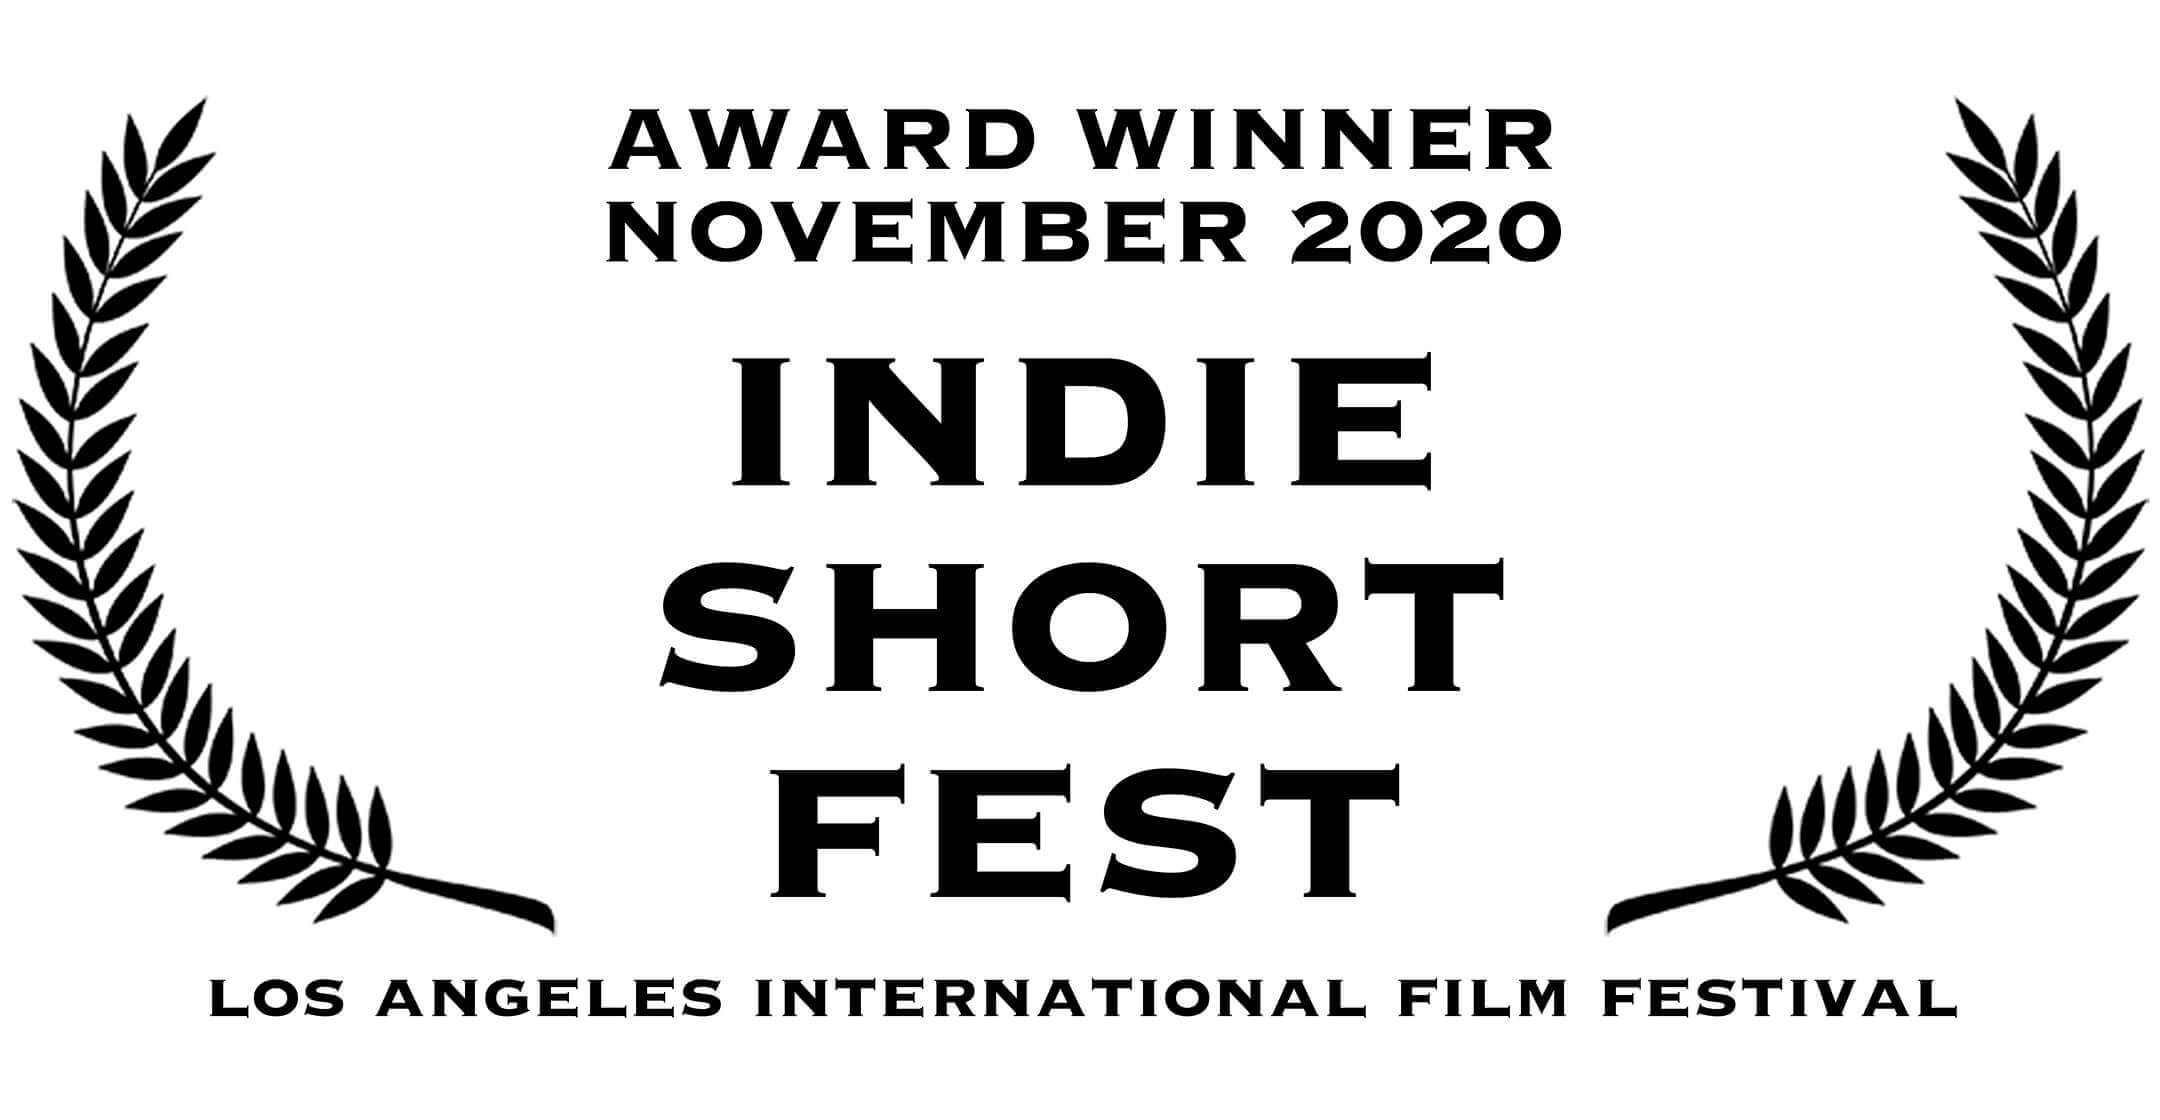 AWARD WINNER NOVEMBER 2020 - INDIE SHORT FEST - LOS ANGELES INTERNATIONAL FILM FESTIVAL